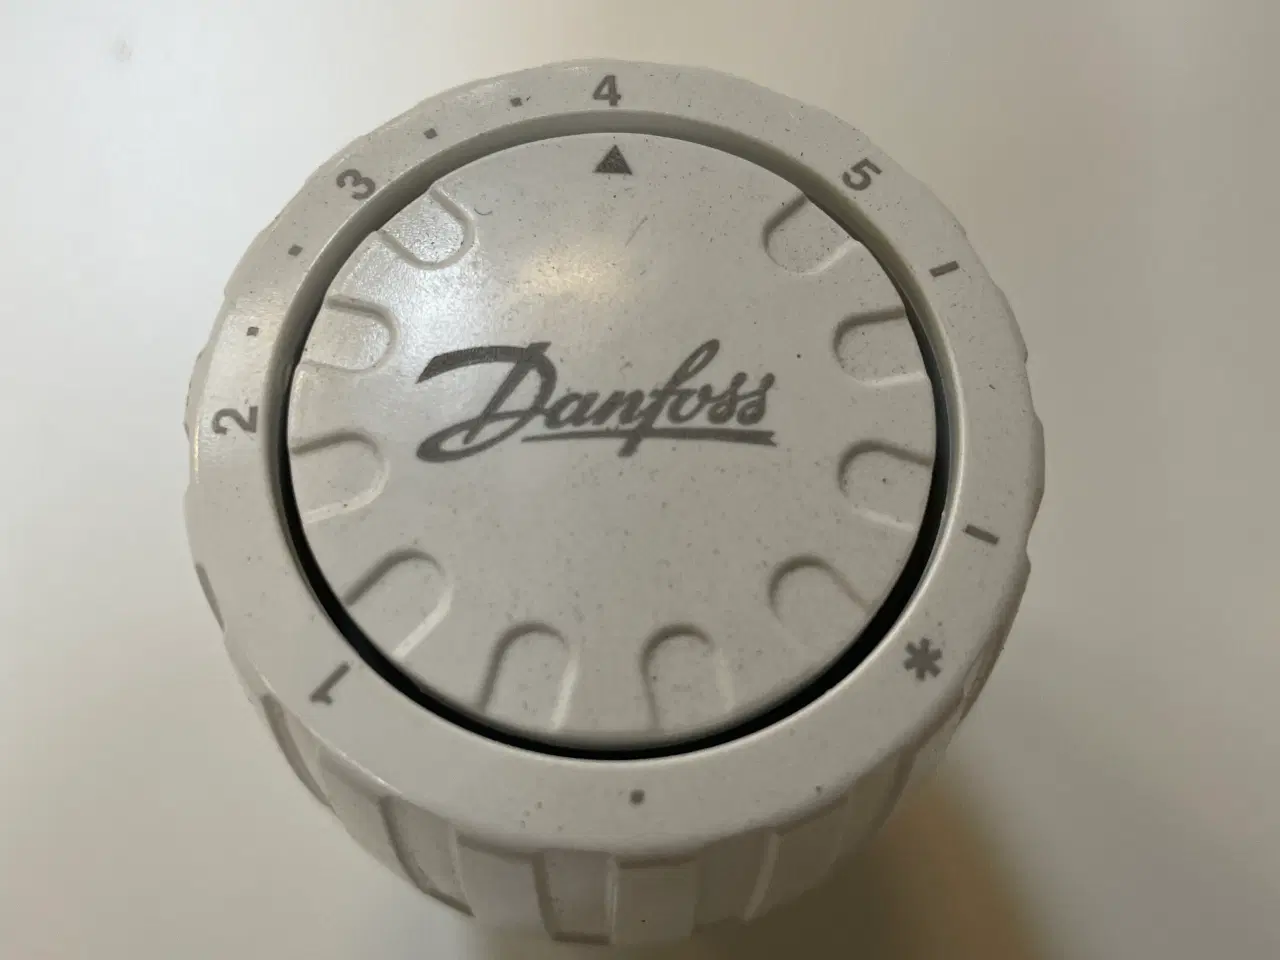 Billede 1 - Danfoss radiator termostat ra 2990, hvid